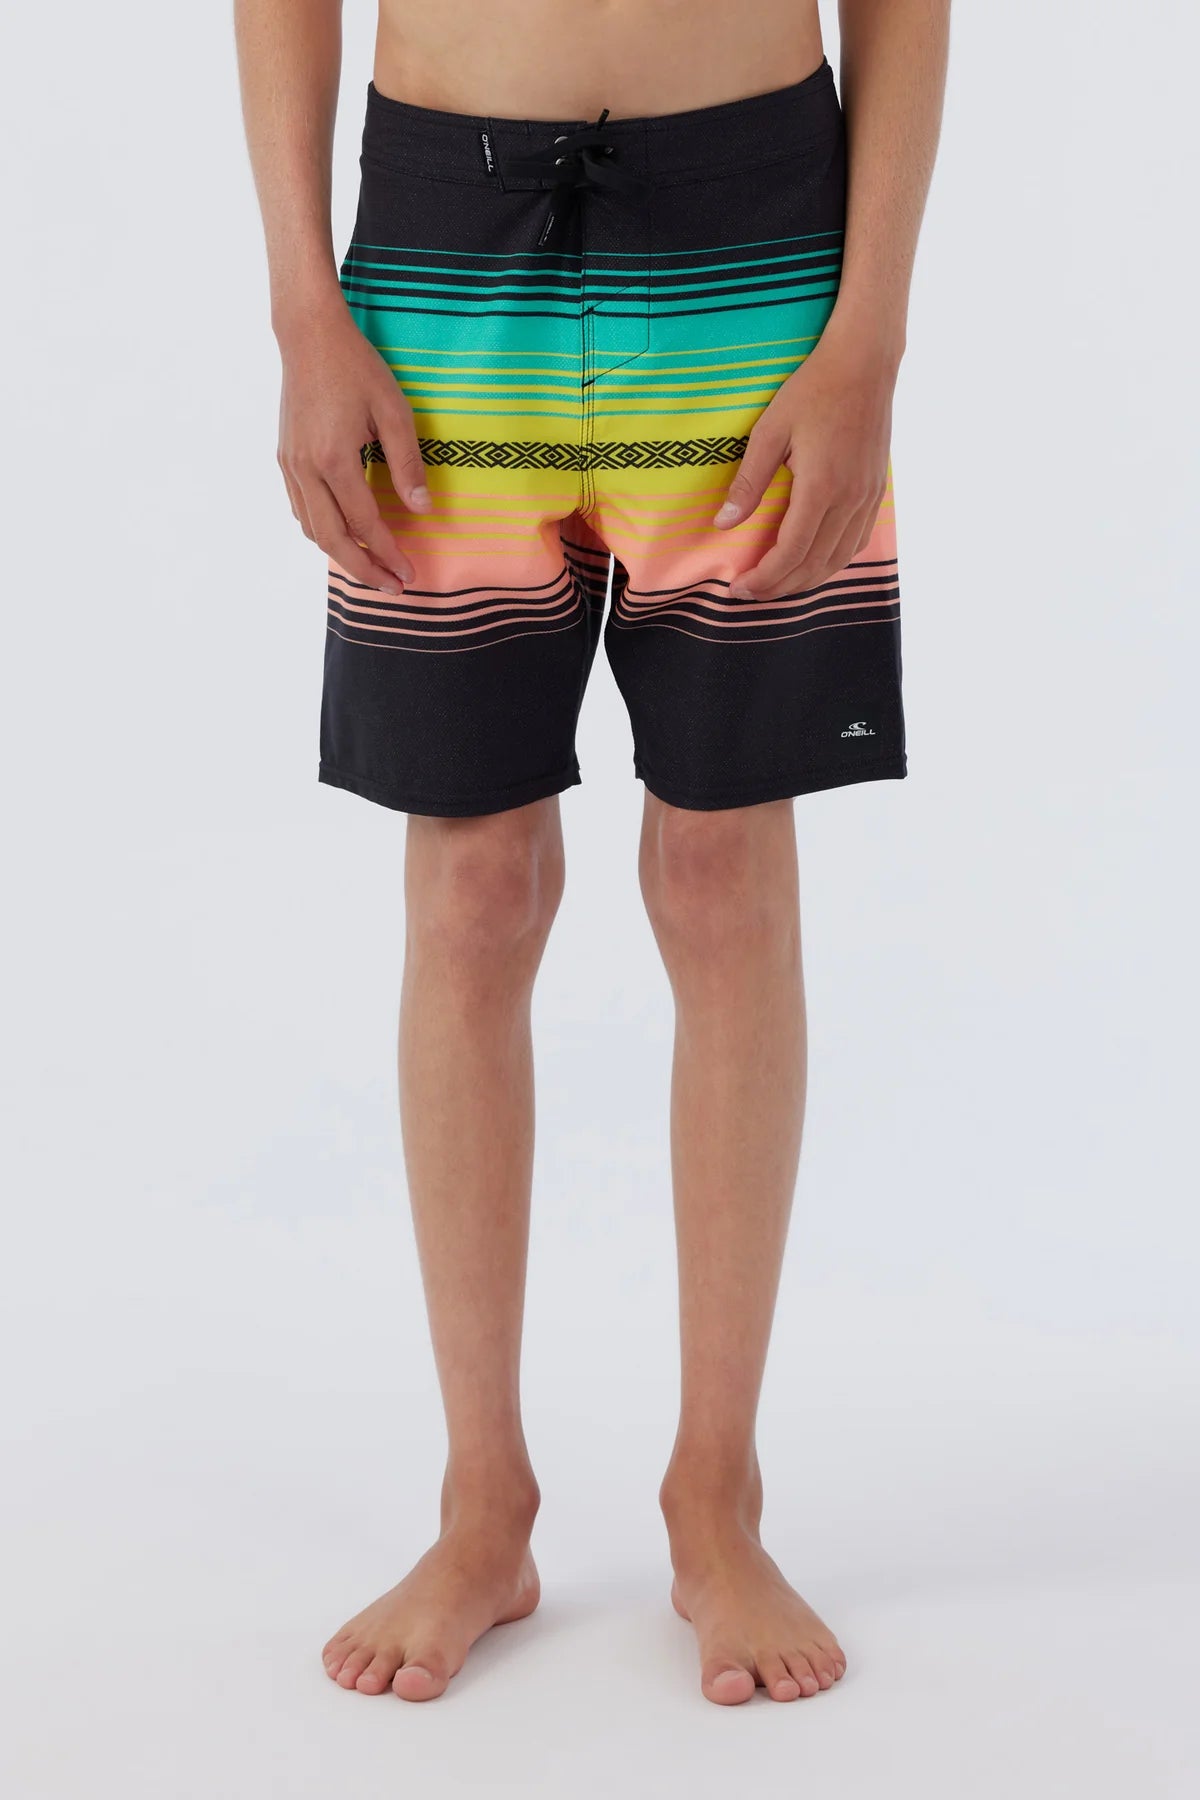 Jurllyshe Shark Printed Sports Halter Tube Top With Shorts Set